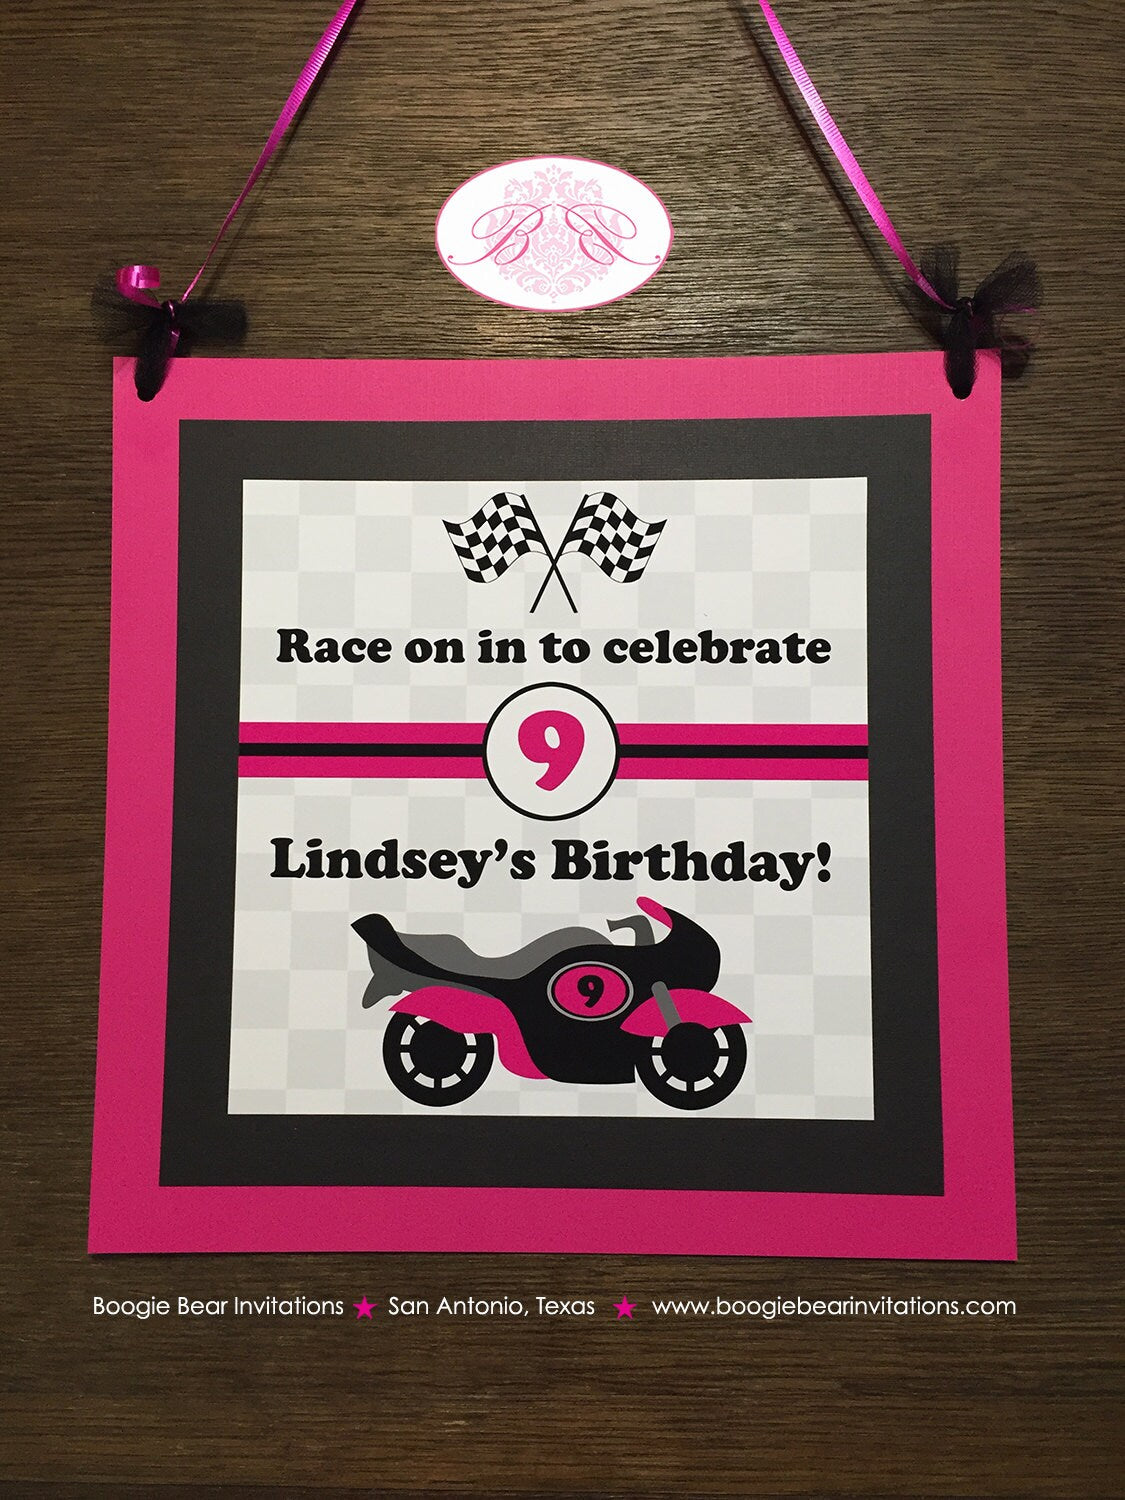 Pink Motorcycle Party Door Banner Birthday Driver Black Enduro Motocross Retro Bike Racing Race Bike Boogie Bear Invitations Lindsey Theme